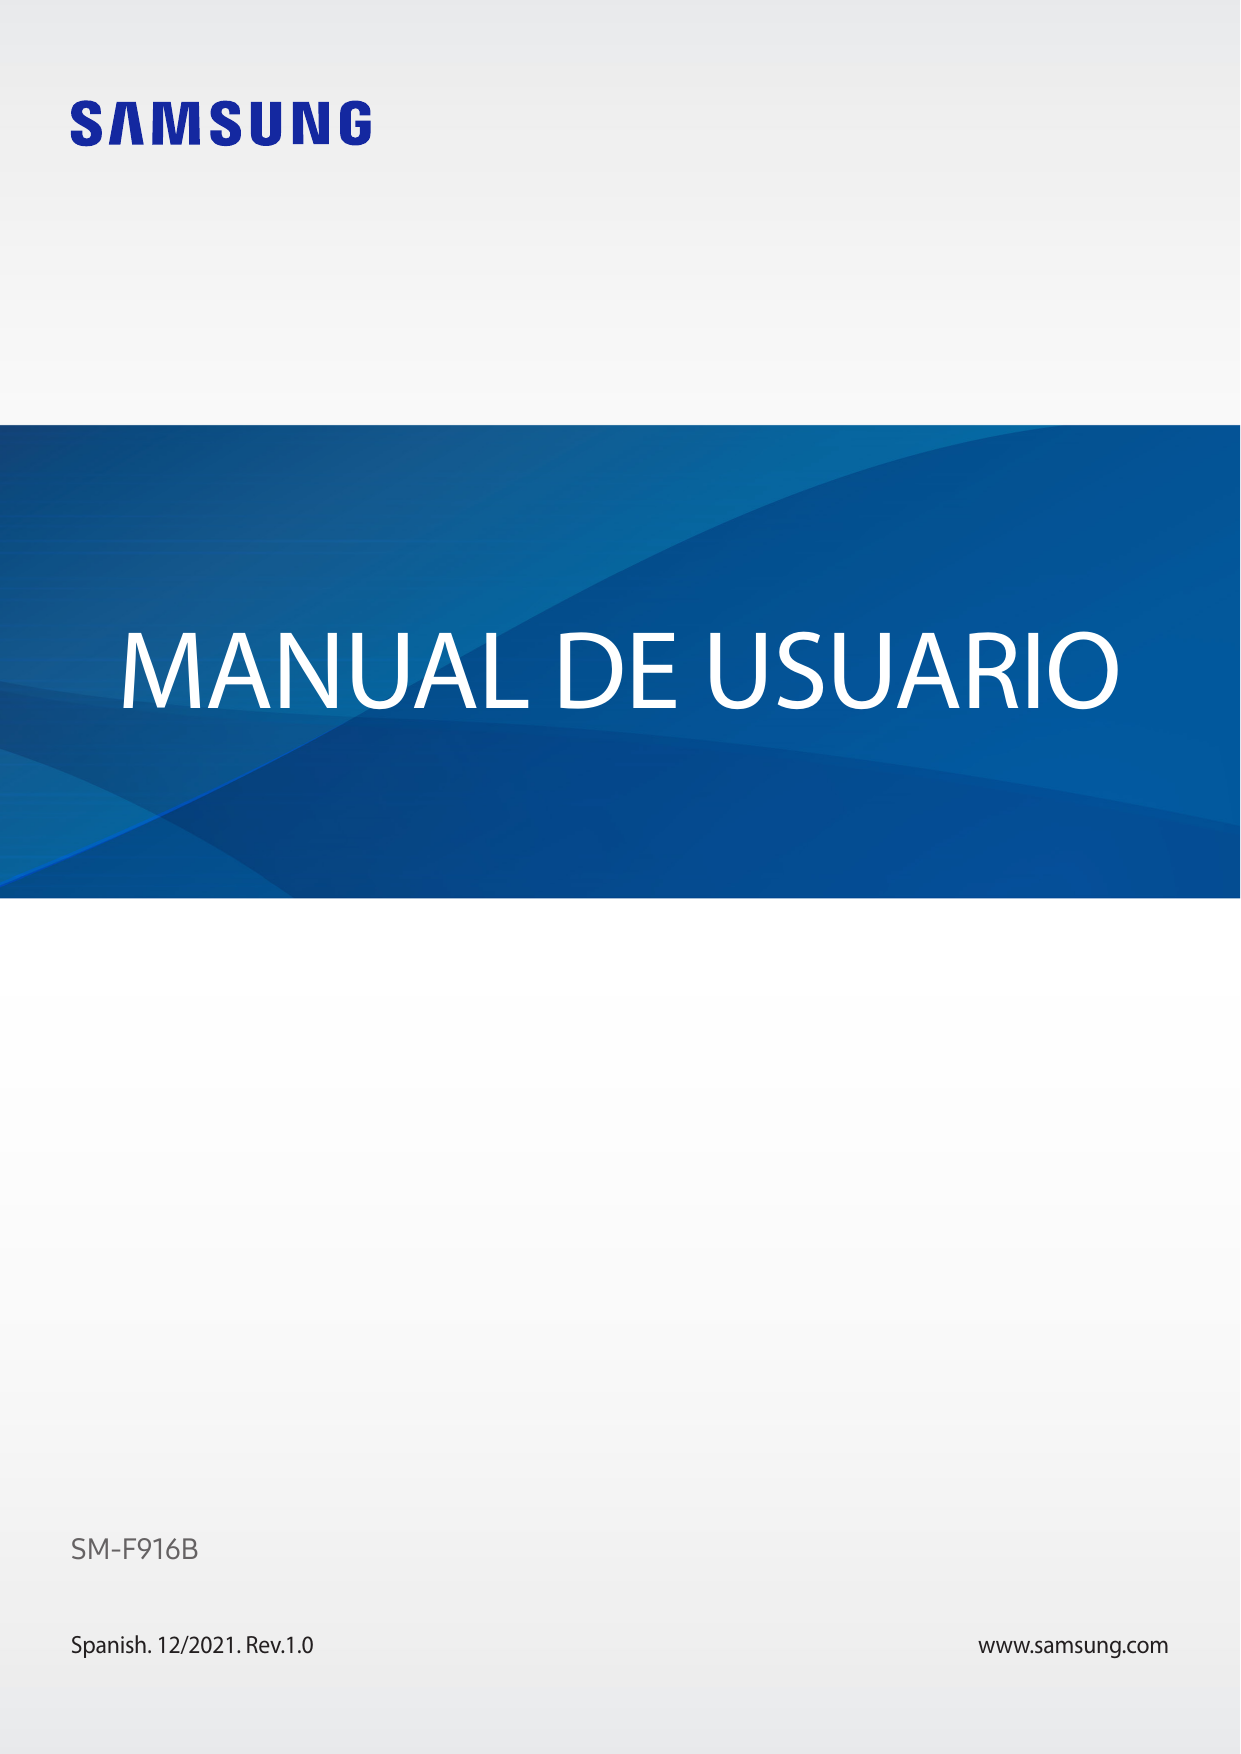 MANUAL DE USUARIOSM-F916BSpanish. 12/2021. Rev.1.0www.samsung.com